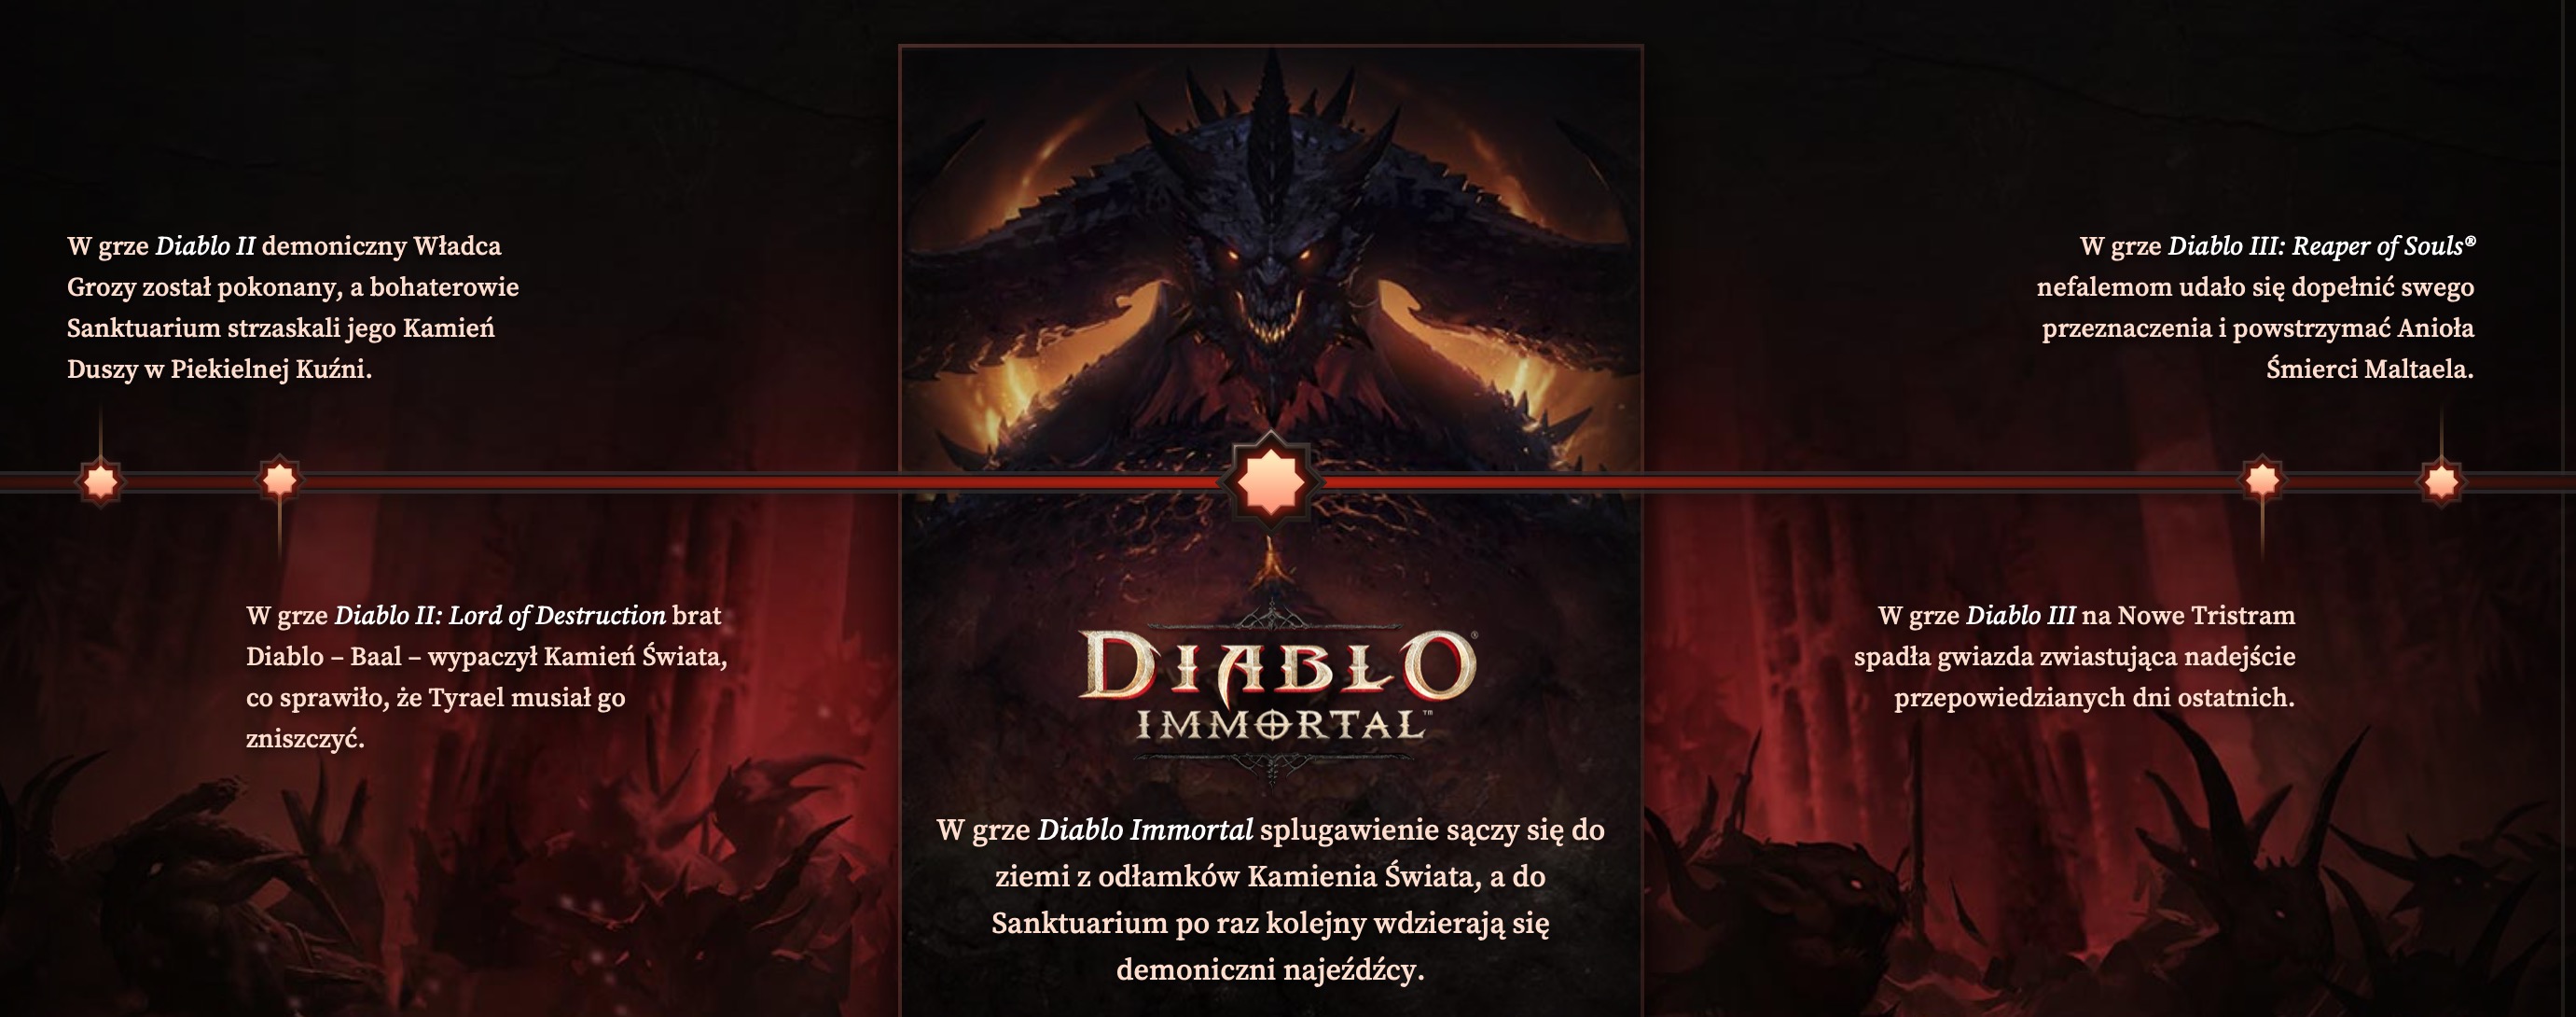 diablo 3 immortal announcement